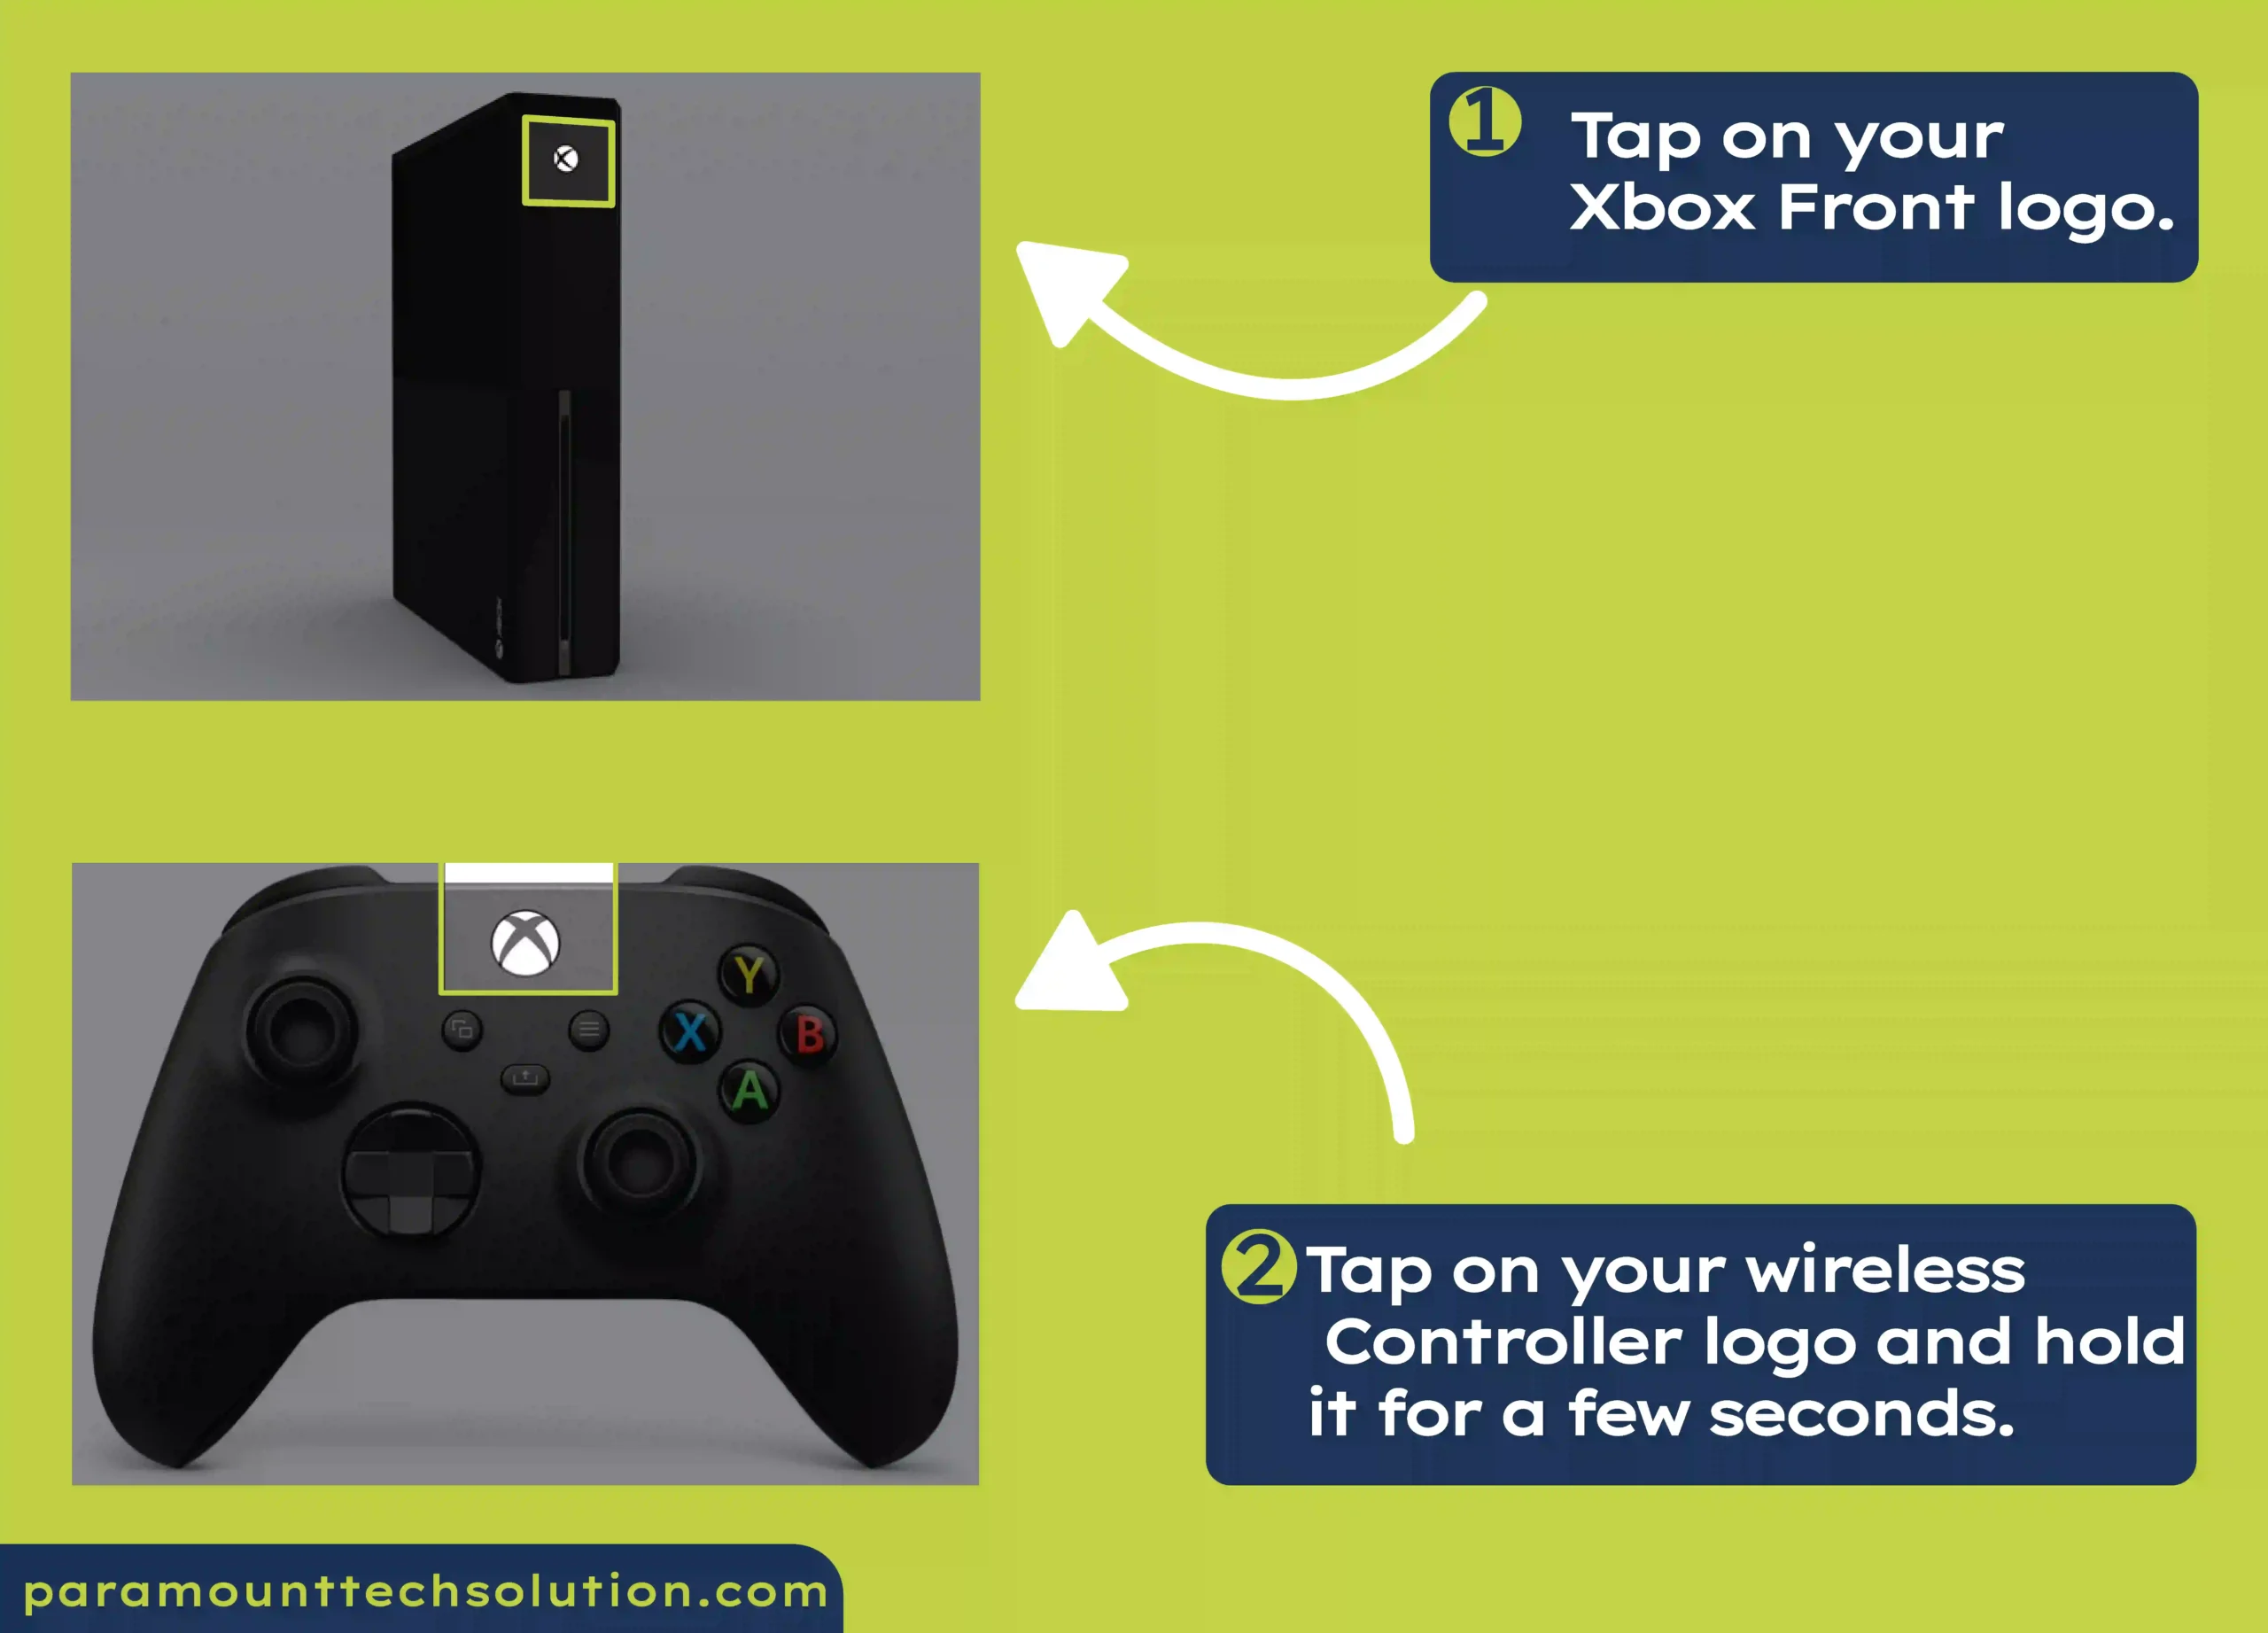 Original Xbox wireless controller to the Xbox